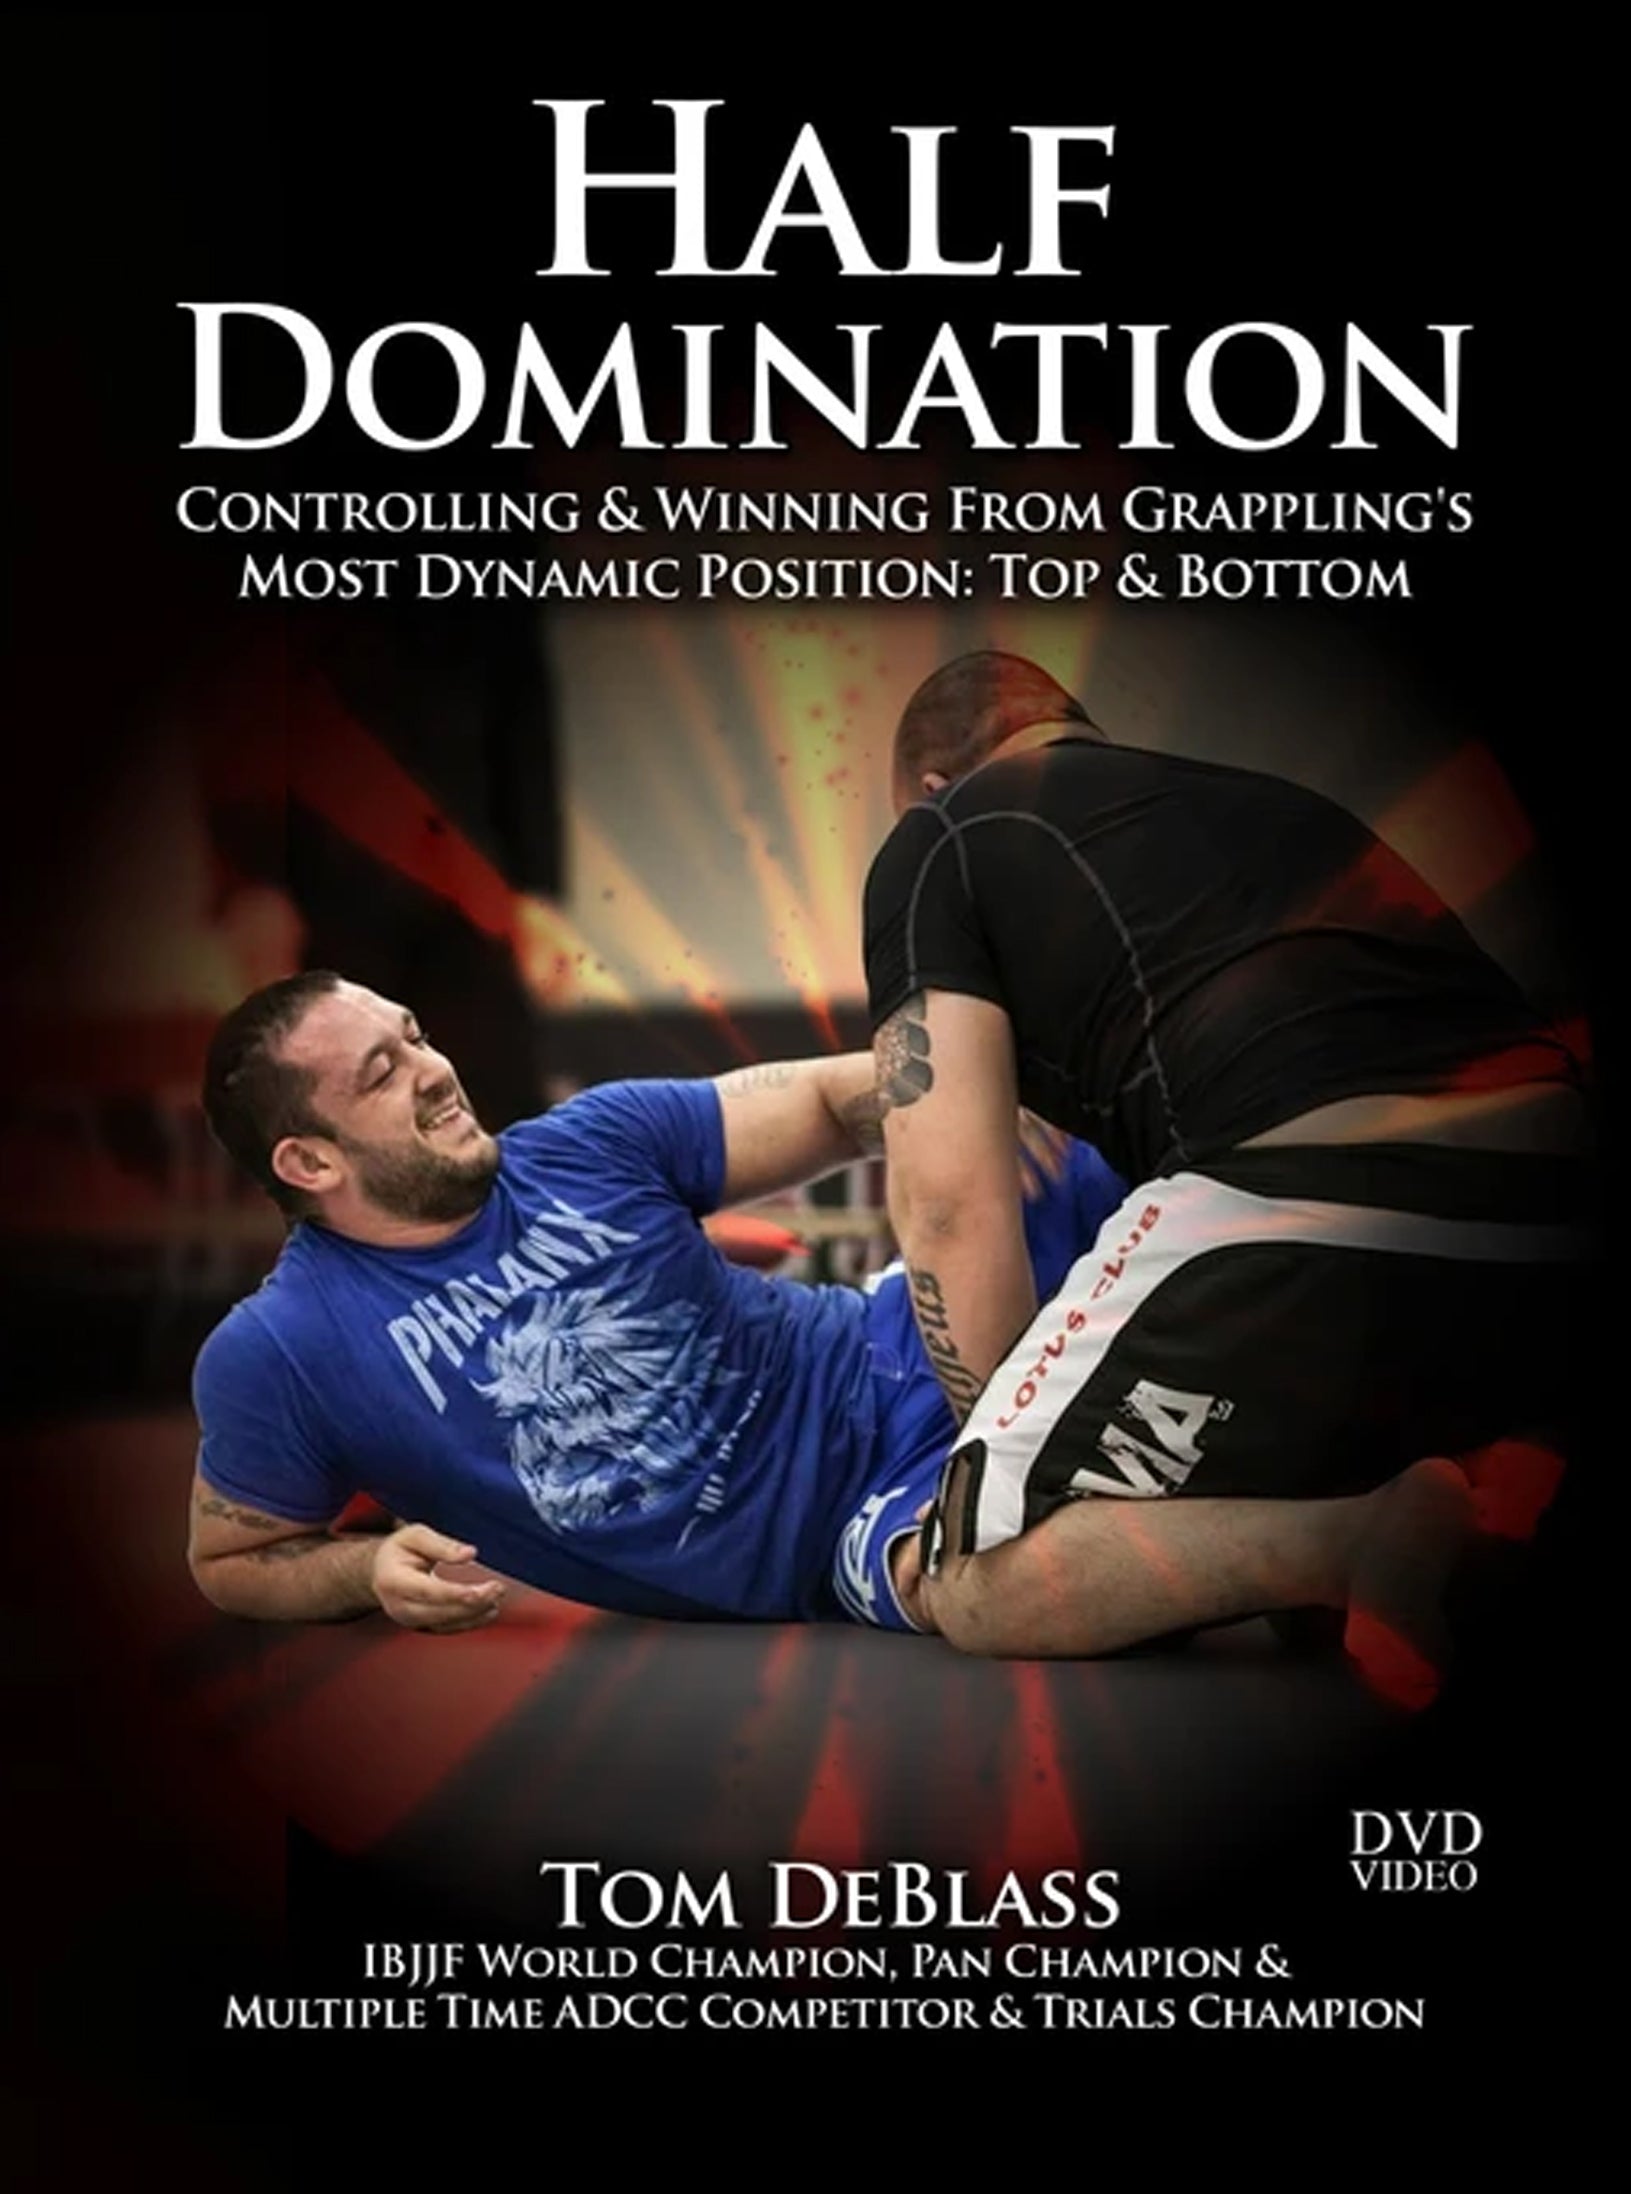 HALF DOMINATION BY TOM DEBLASS DVD